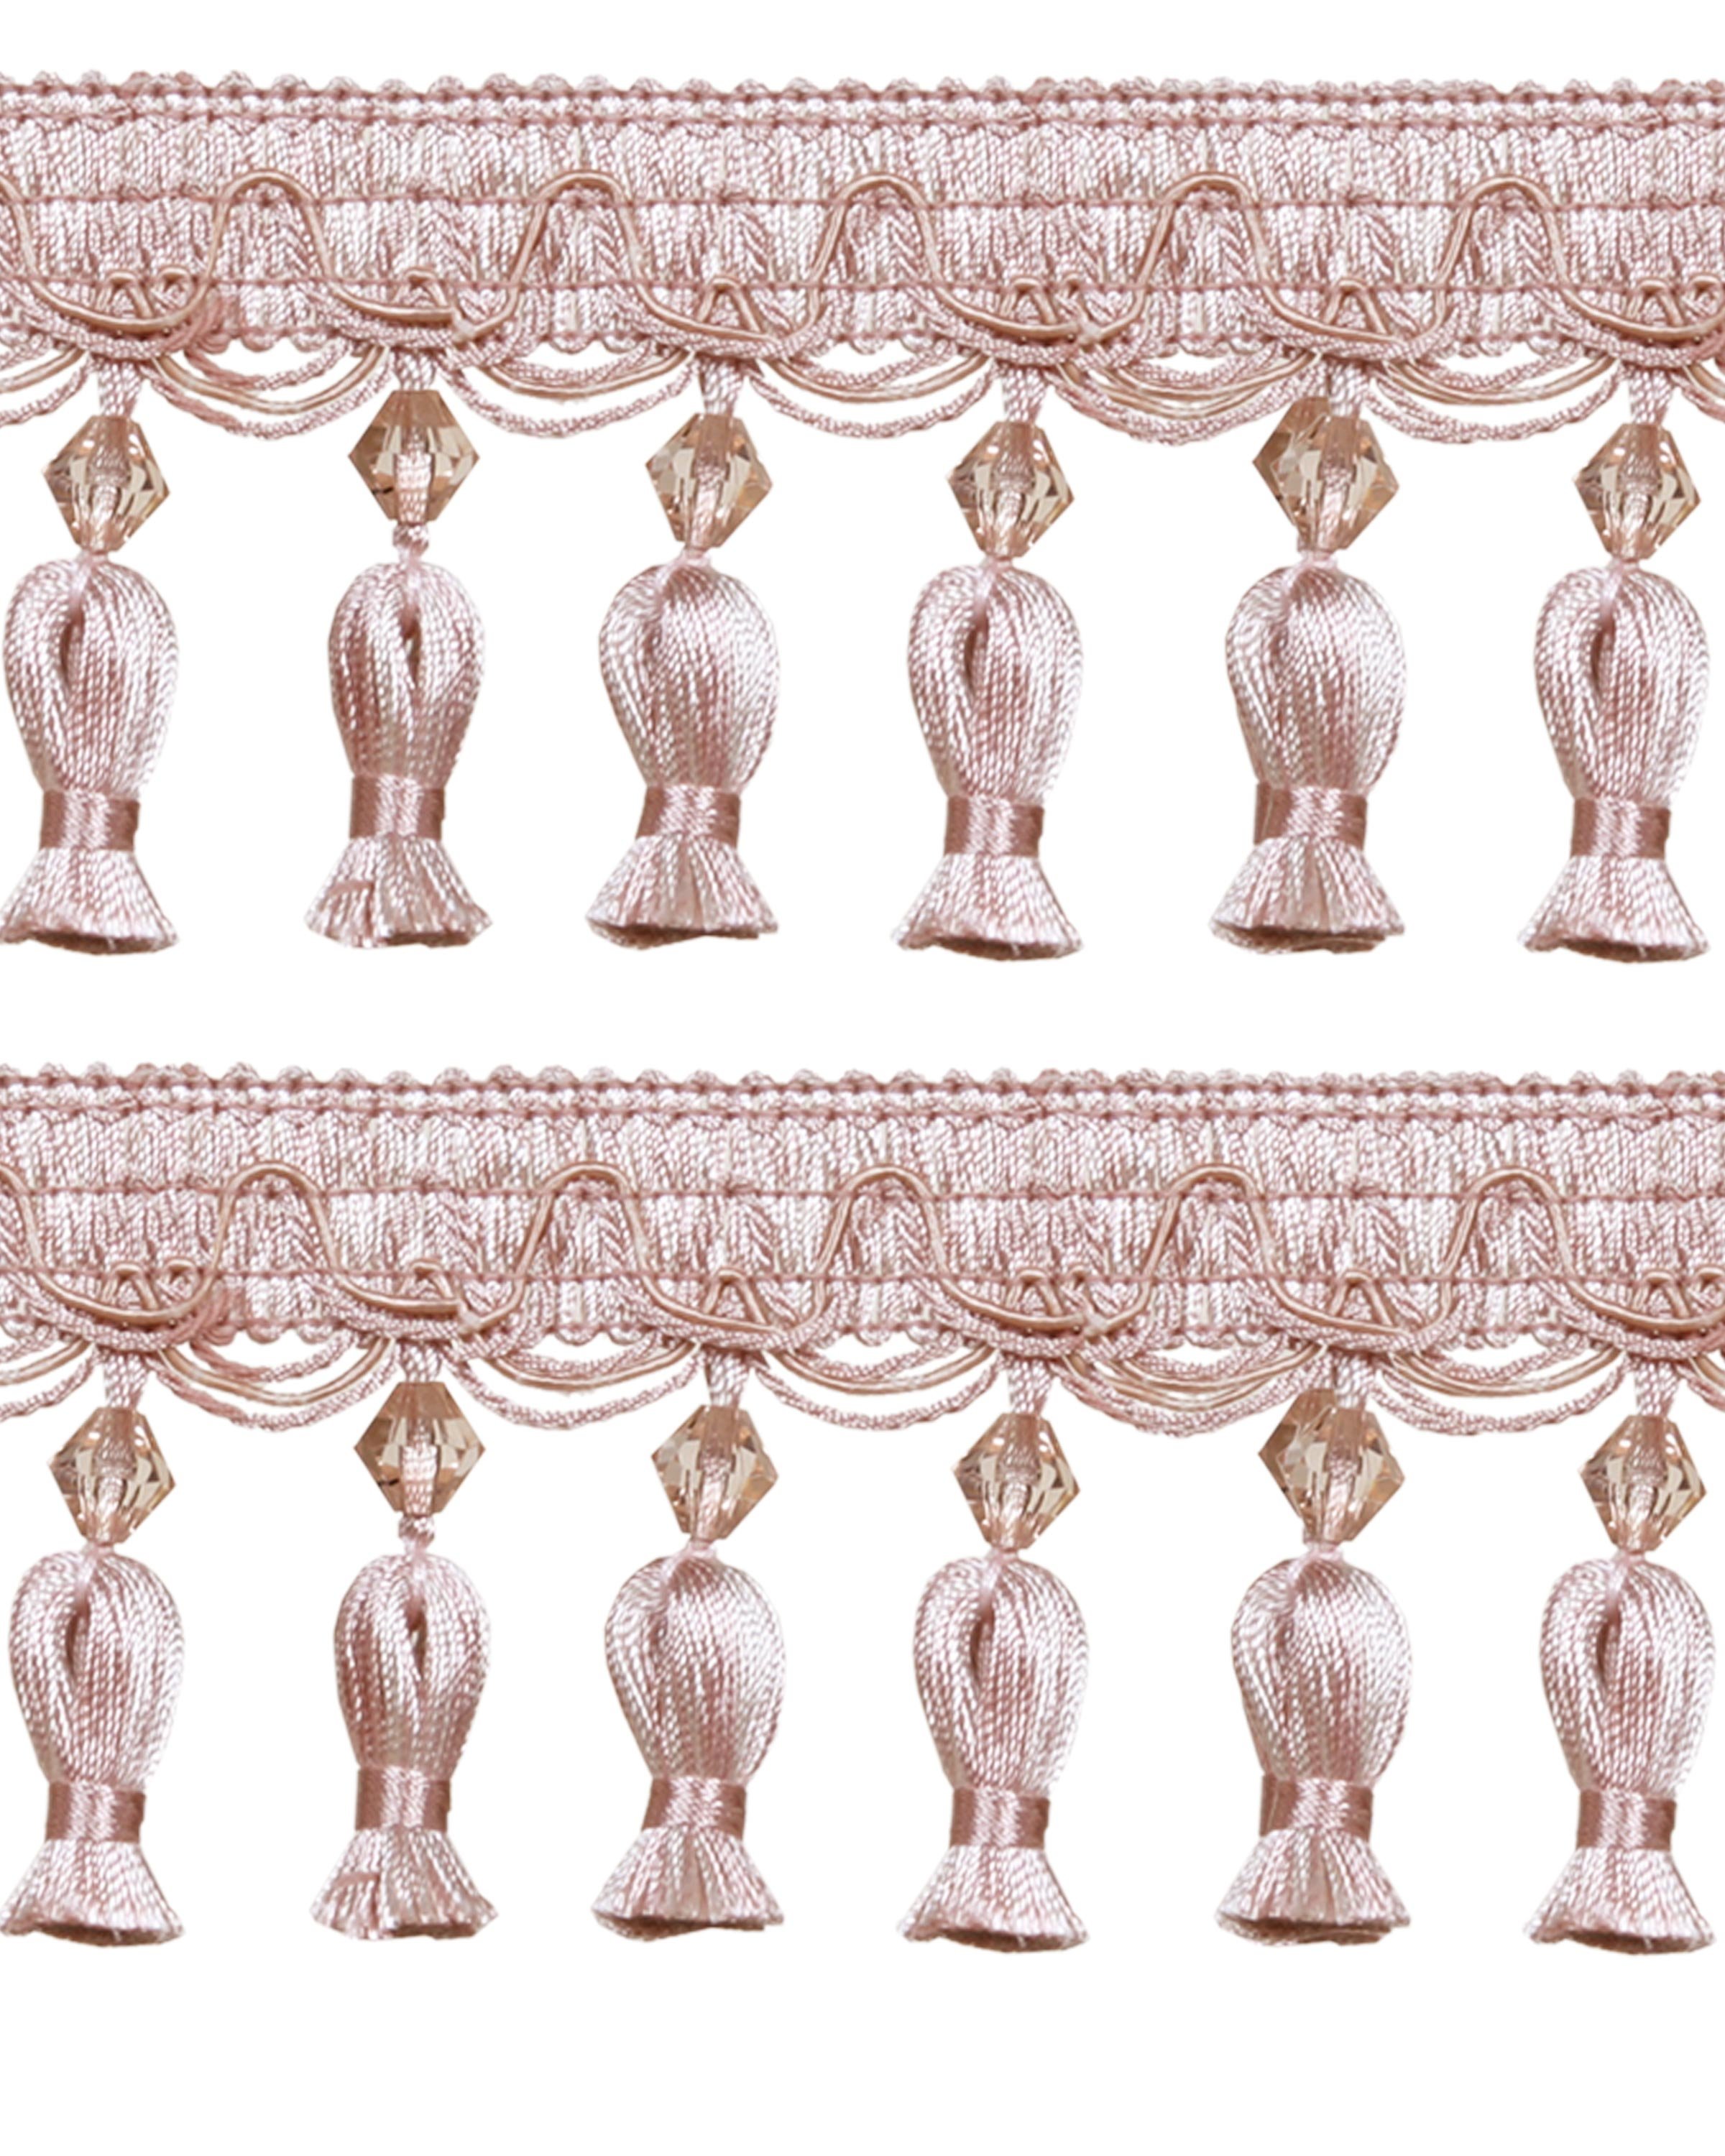 Fringe Acorn Tassels with Bead - Pink / Cream 70mm Price is per 5 metres